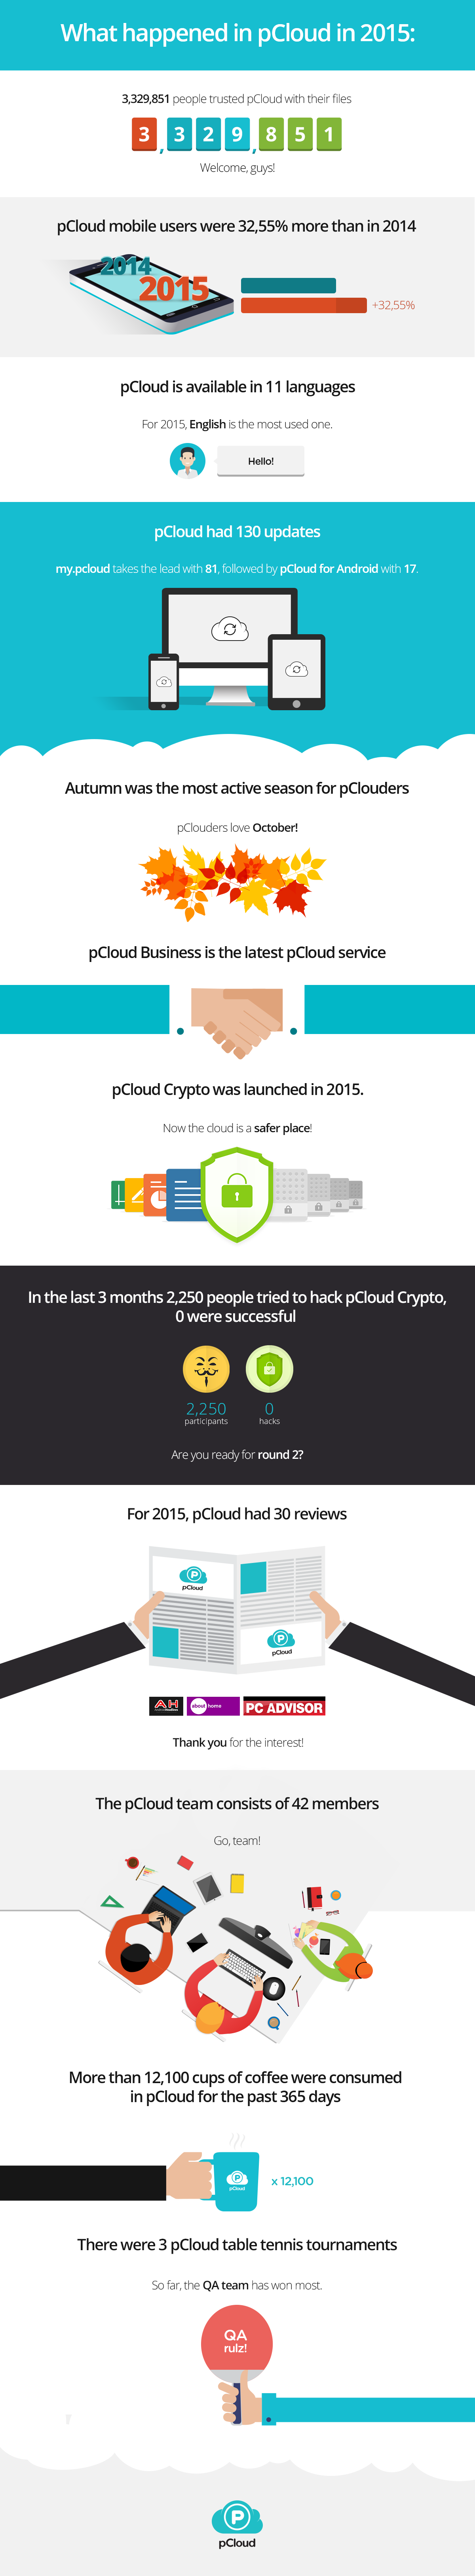 pCloud Recap 2015, Infographic